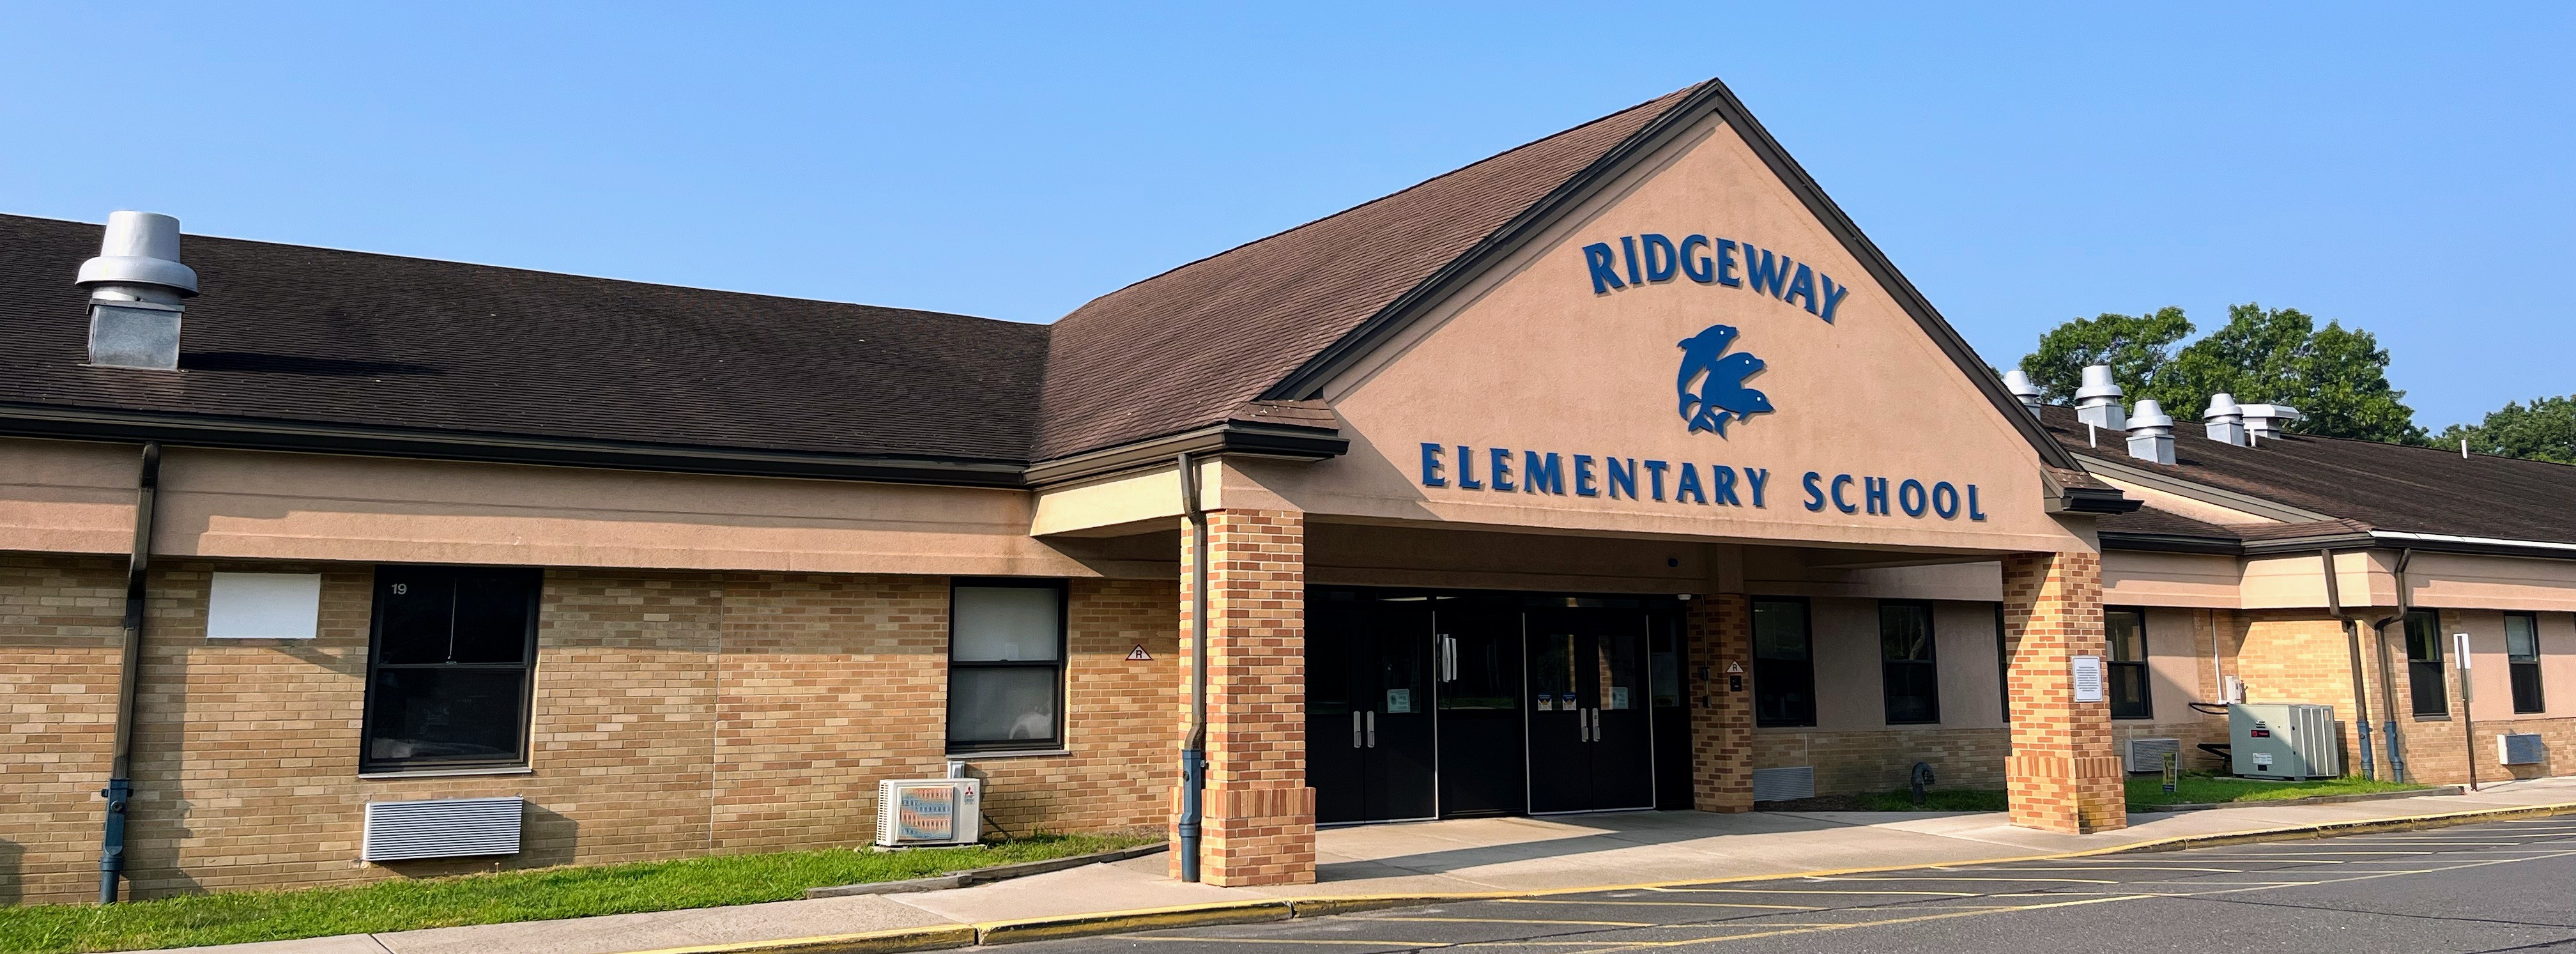 Ridgeway Elementary School Exterior